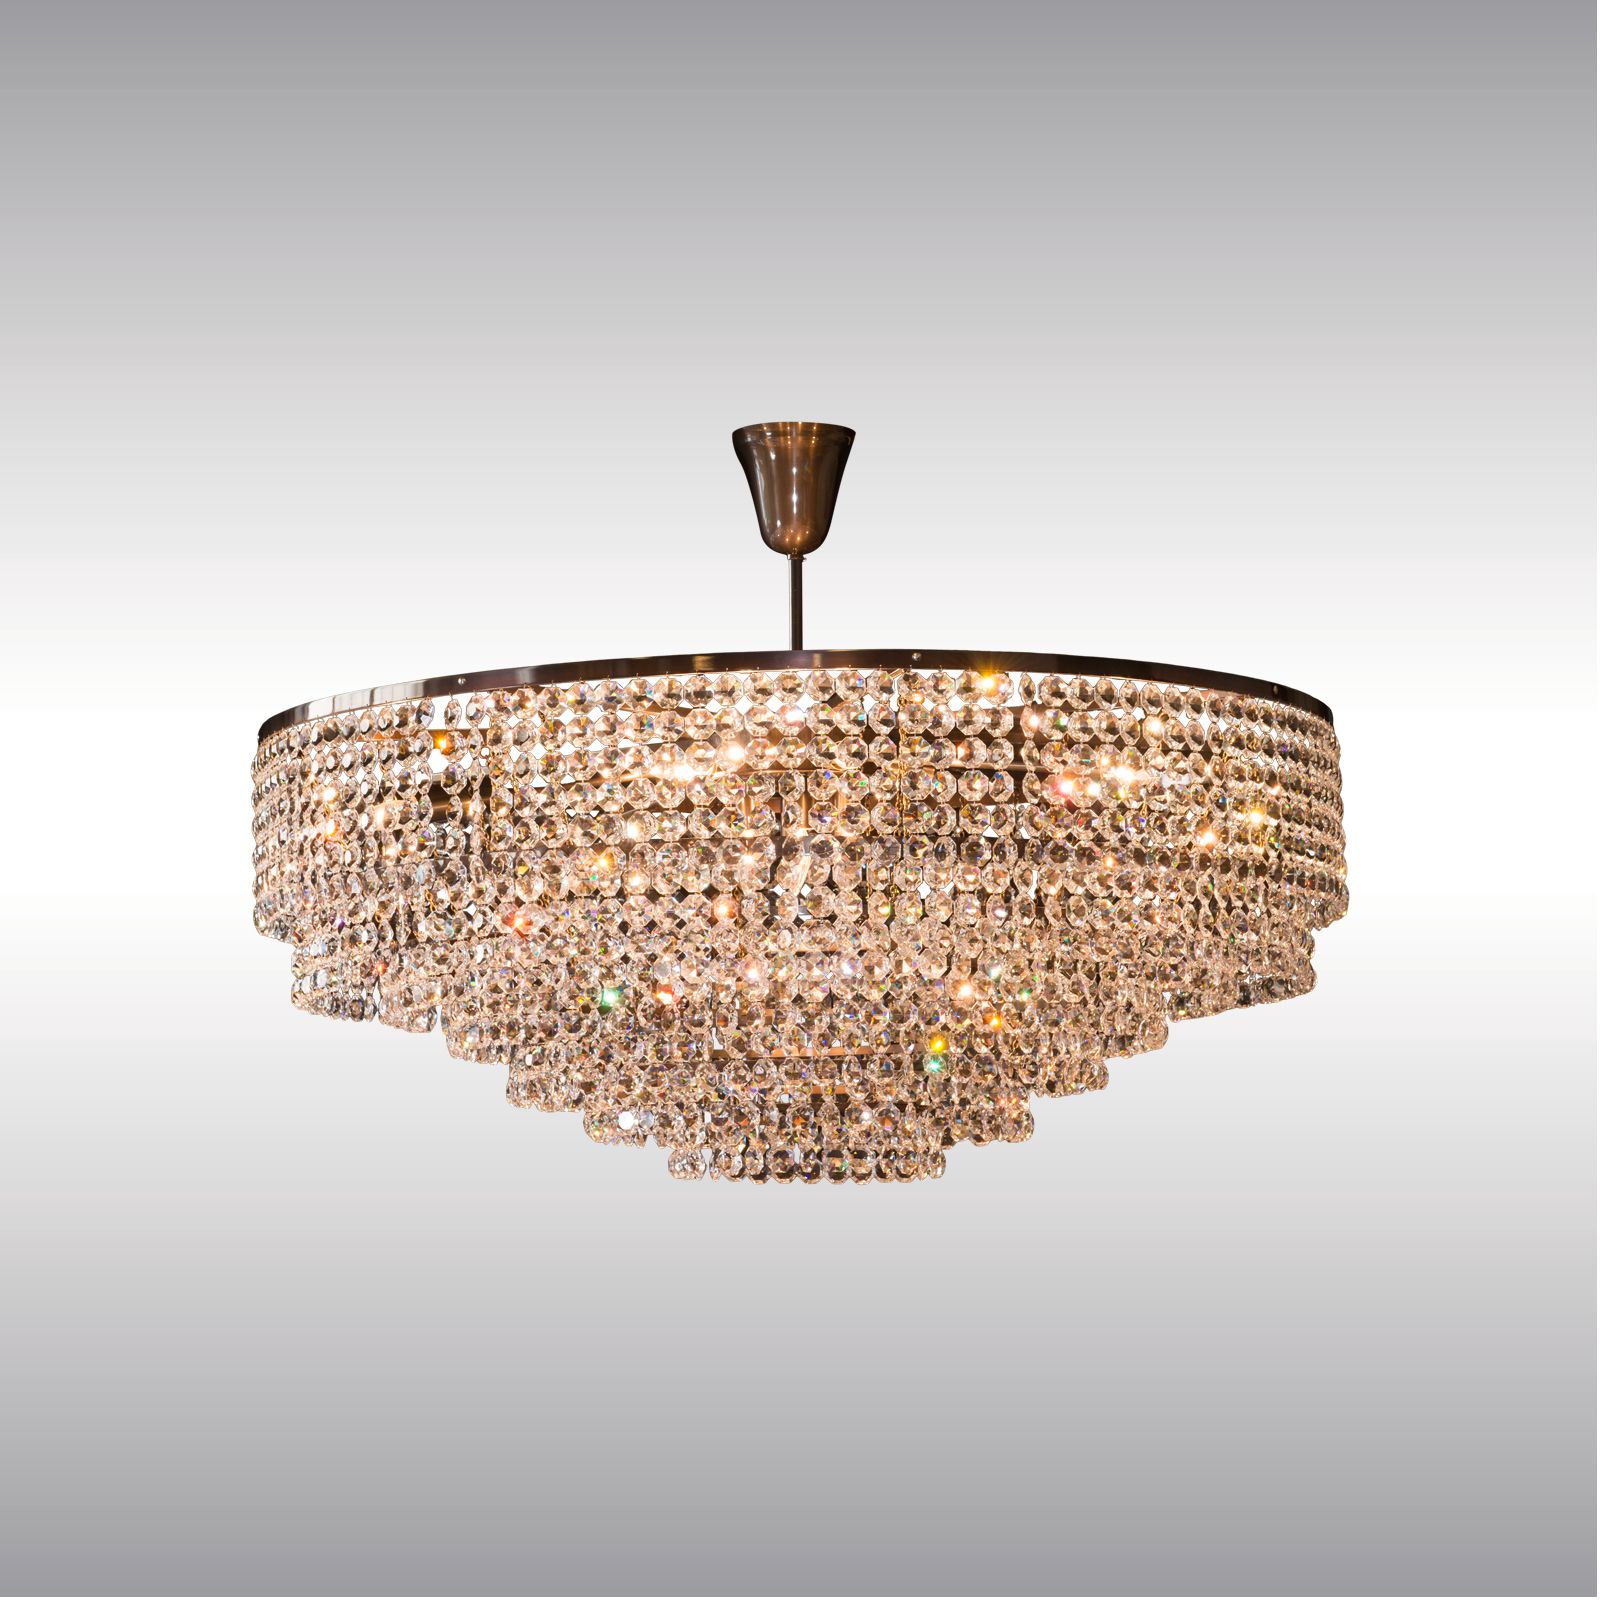 WOKA LAMPS VIENNA - OrderNr.: 22119|Big Crystal Chandelier 48 inch - Design: WOKA